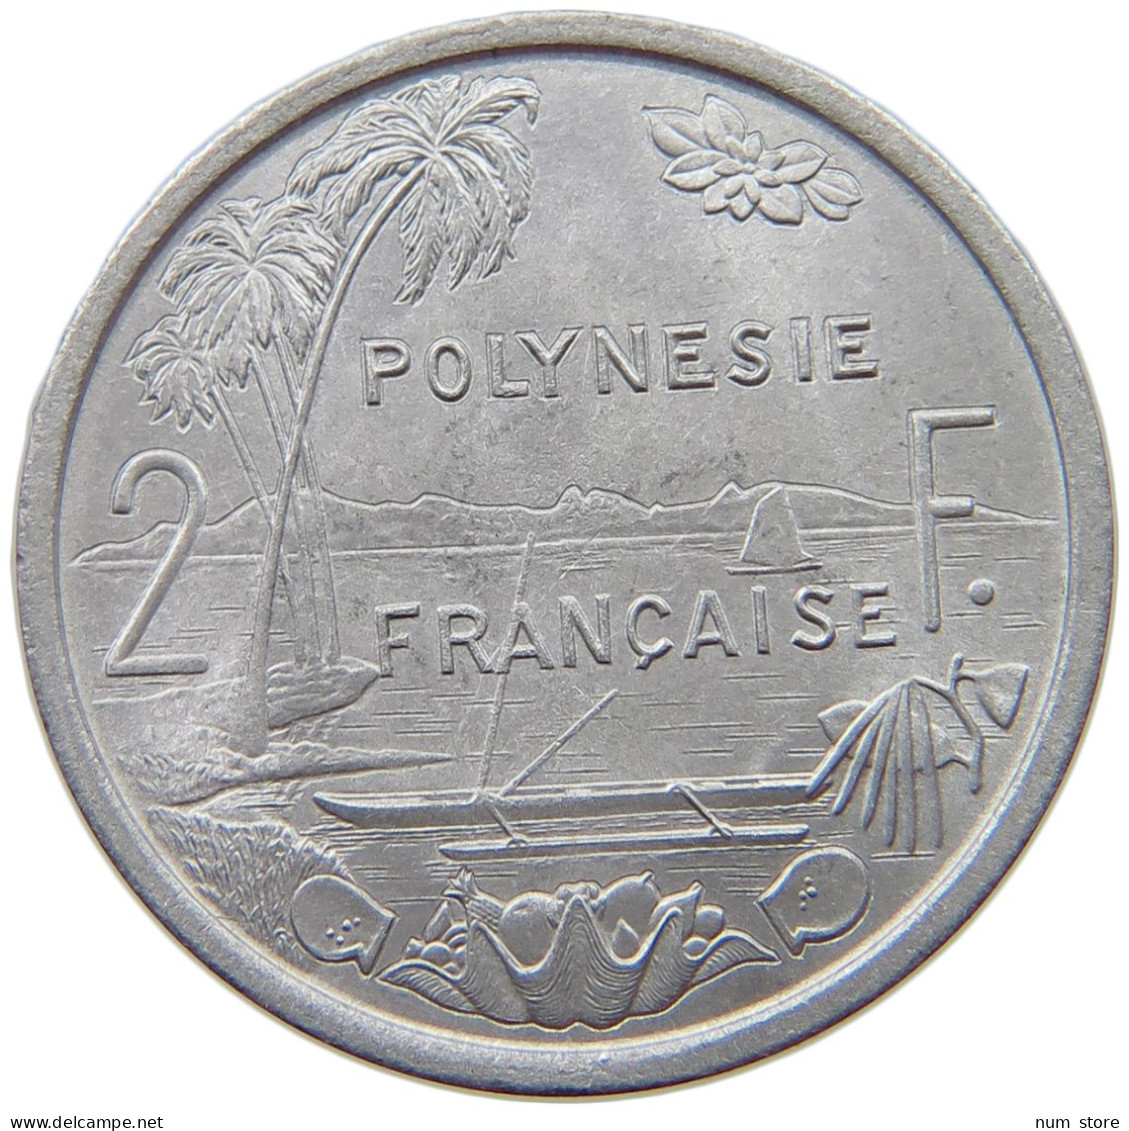 POLYNESIA 2 FRANCS 1973  #a022 0159 - Französisch-Polynesien